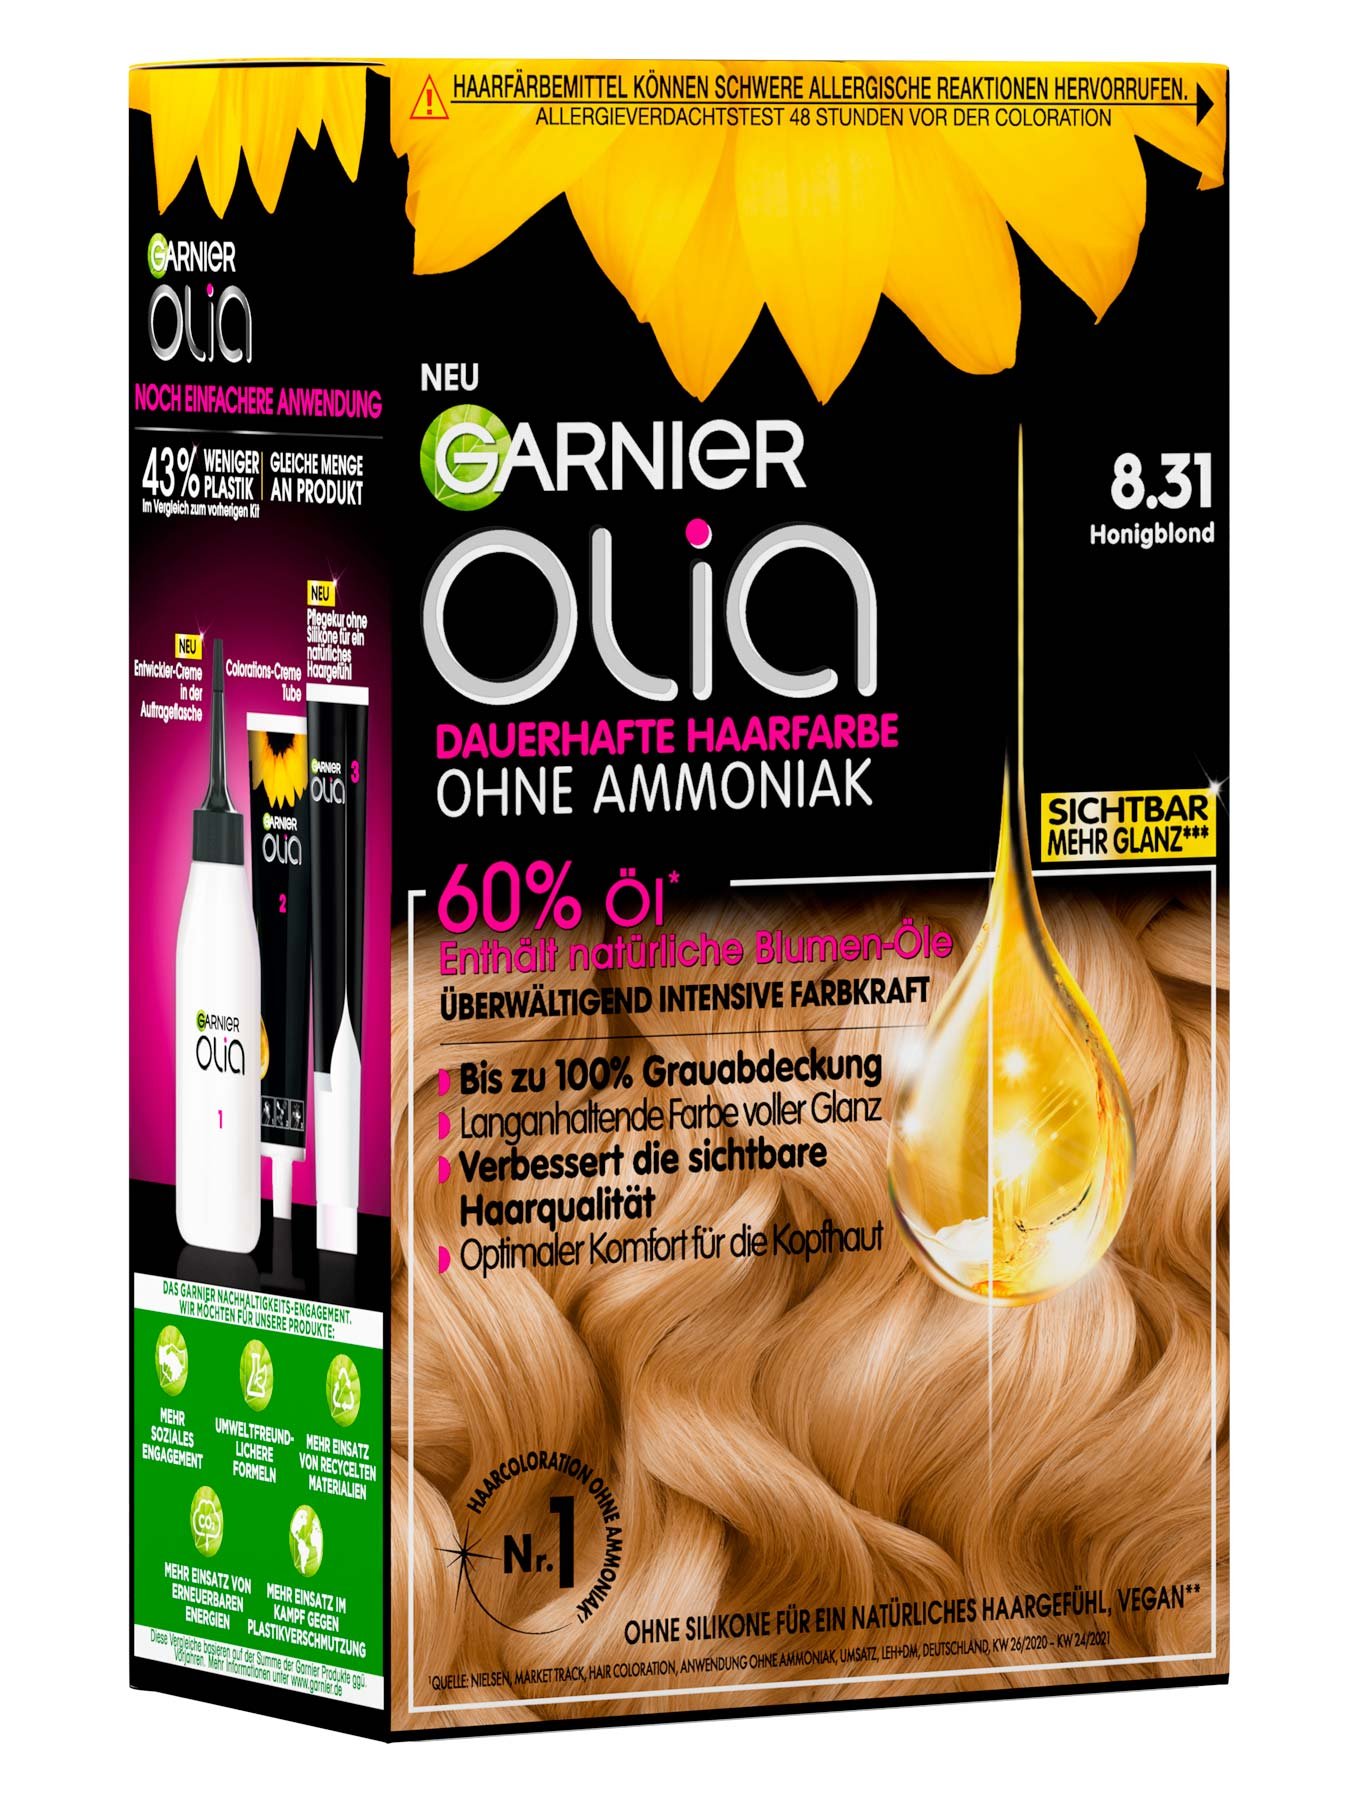 Garnier Olia Nr. 8.31 in Honigblond - Produktansicht links